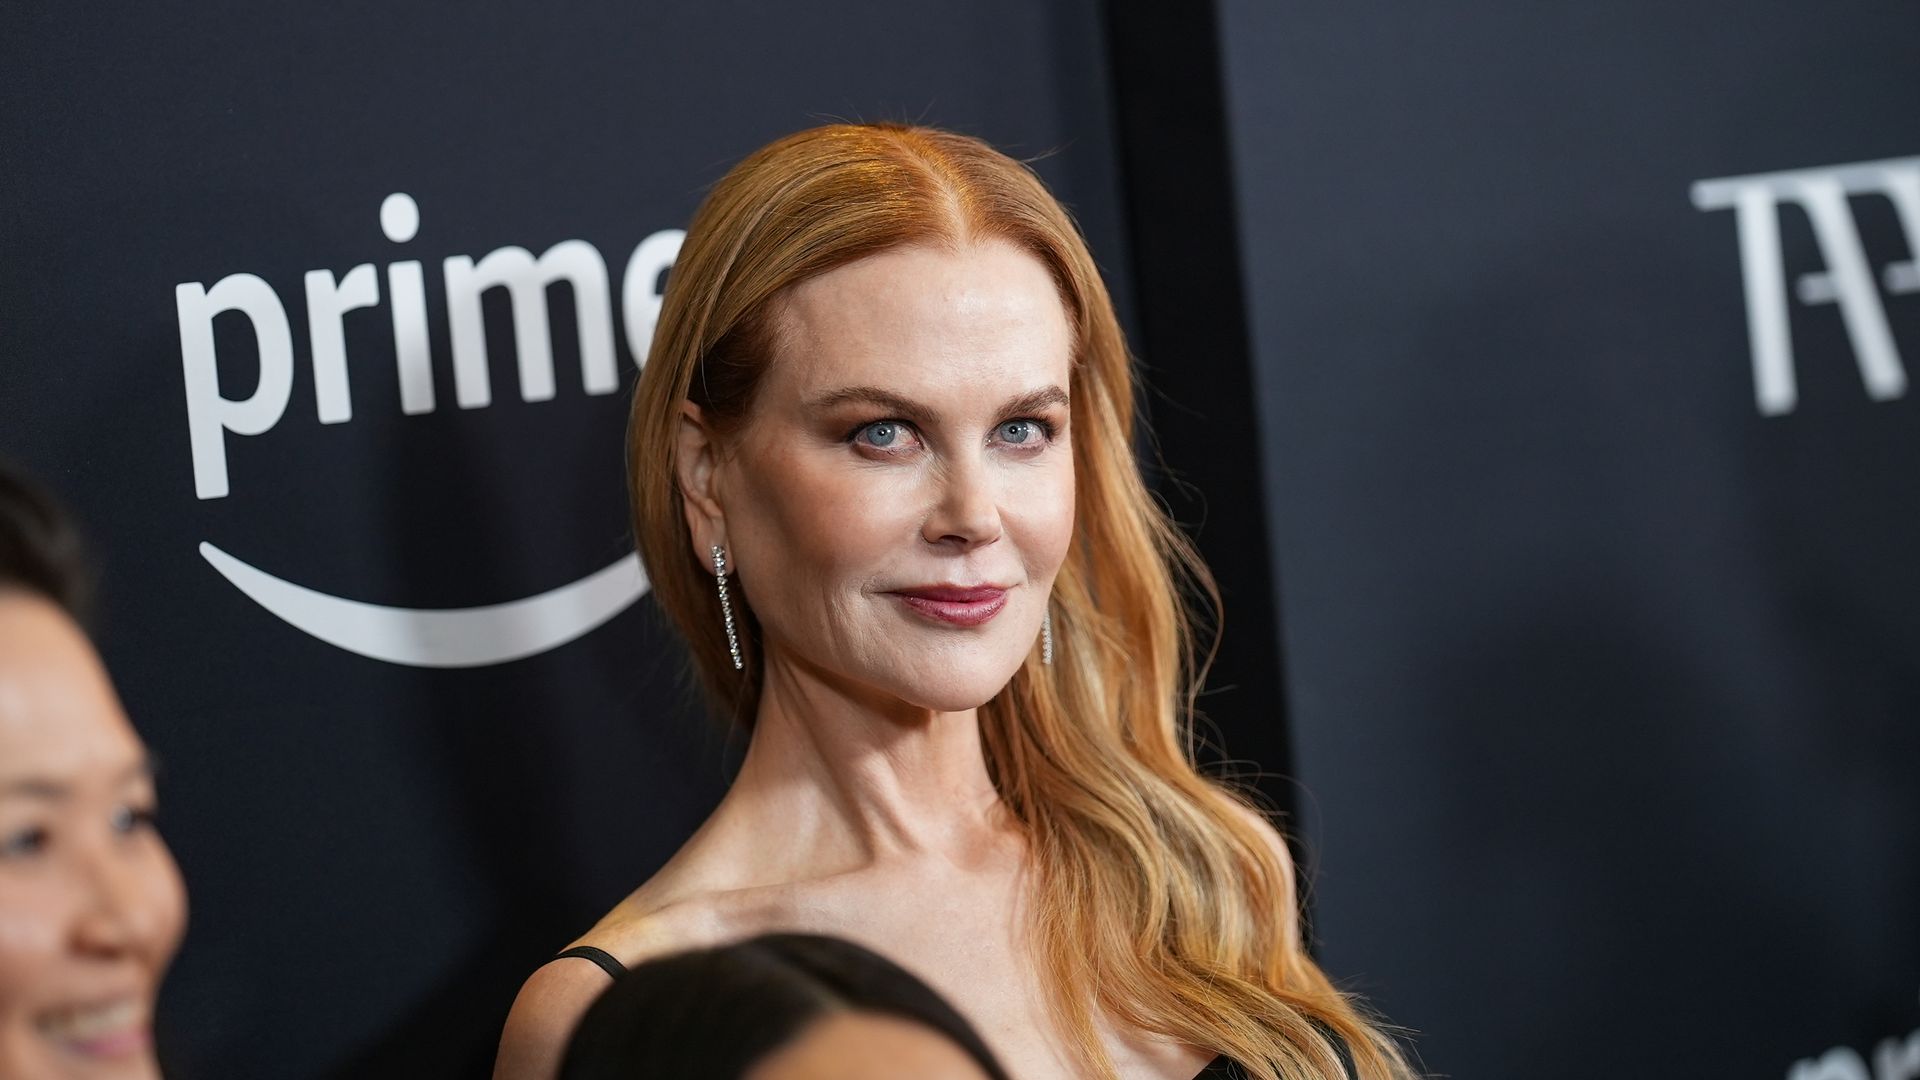 Nicole Kidman's drastic appearance change – and how it won her an Oscar